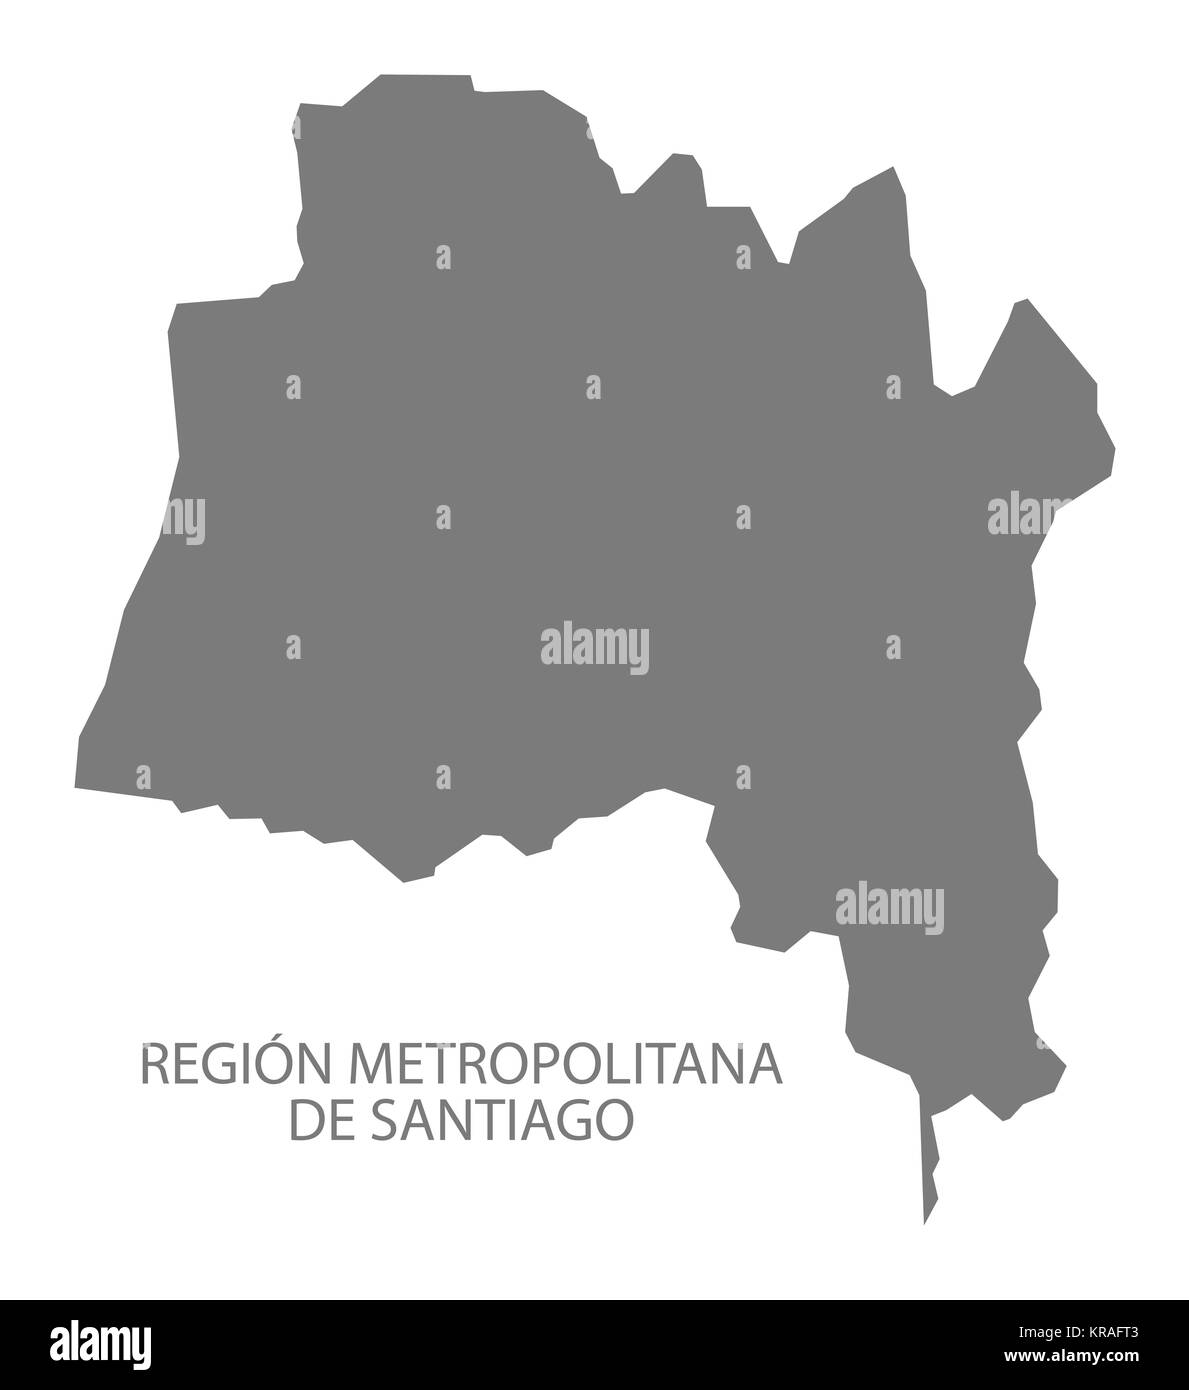 Region Metropolitana de Santiago Chile Map in grey Stock Photo